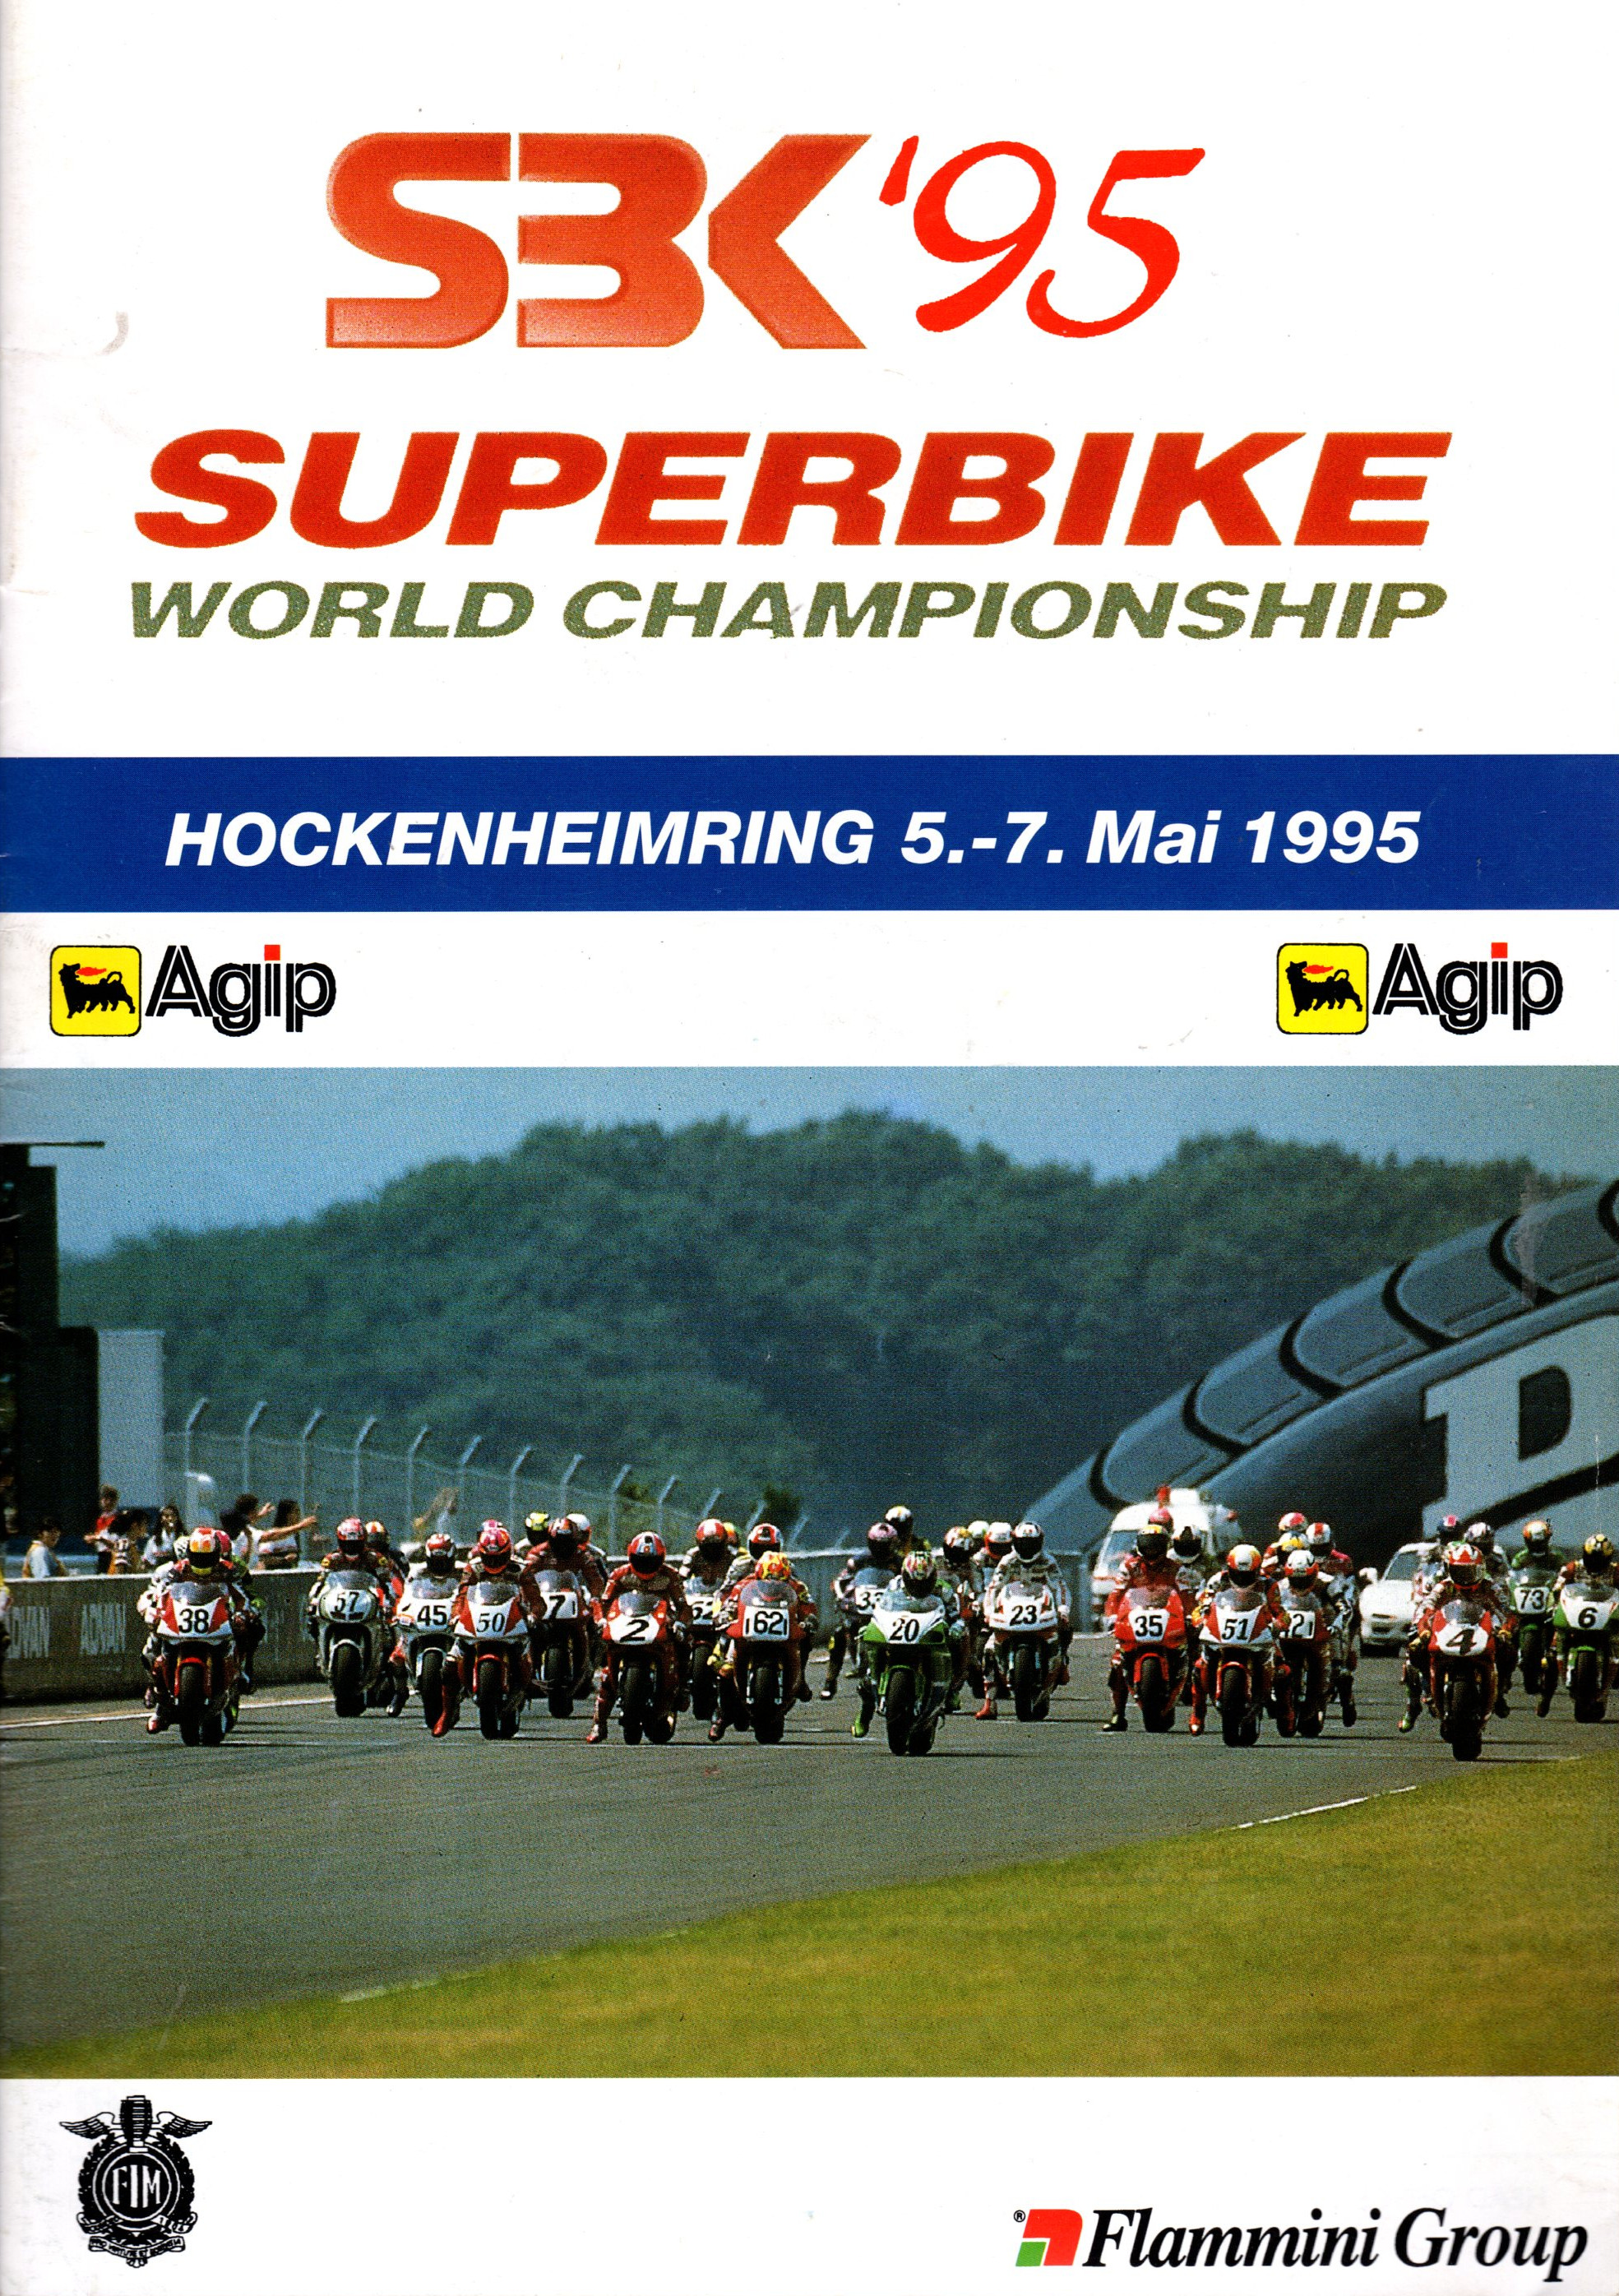 1995 world championship